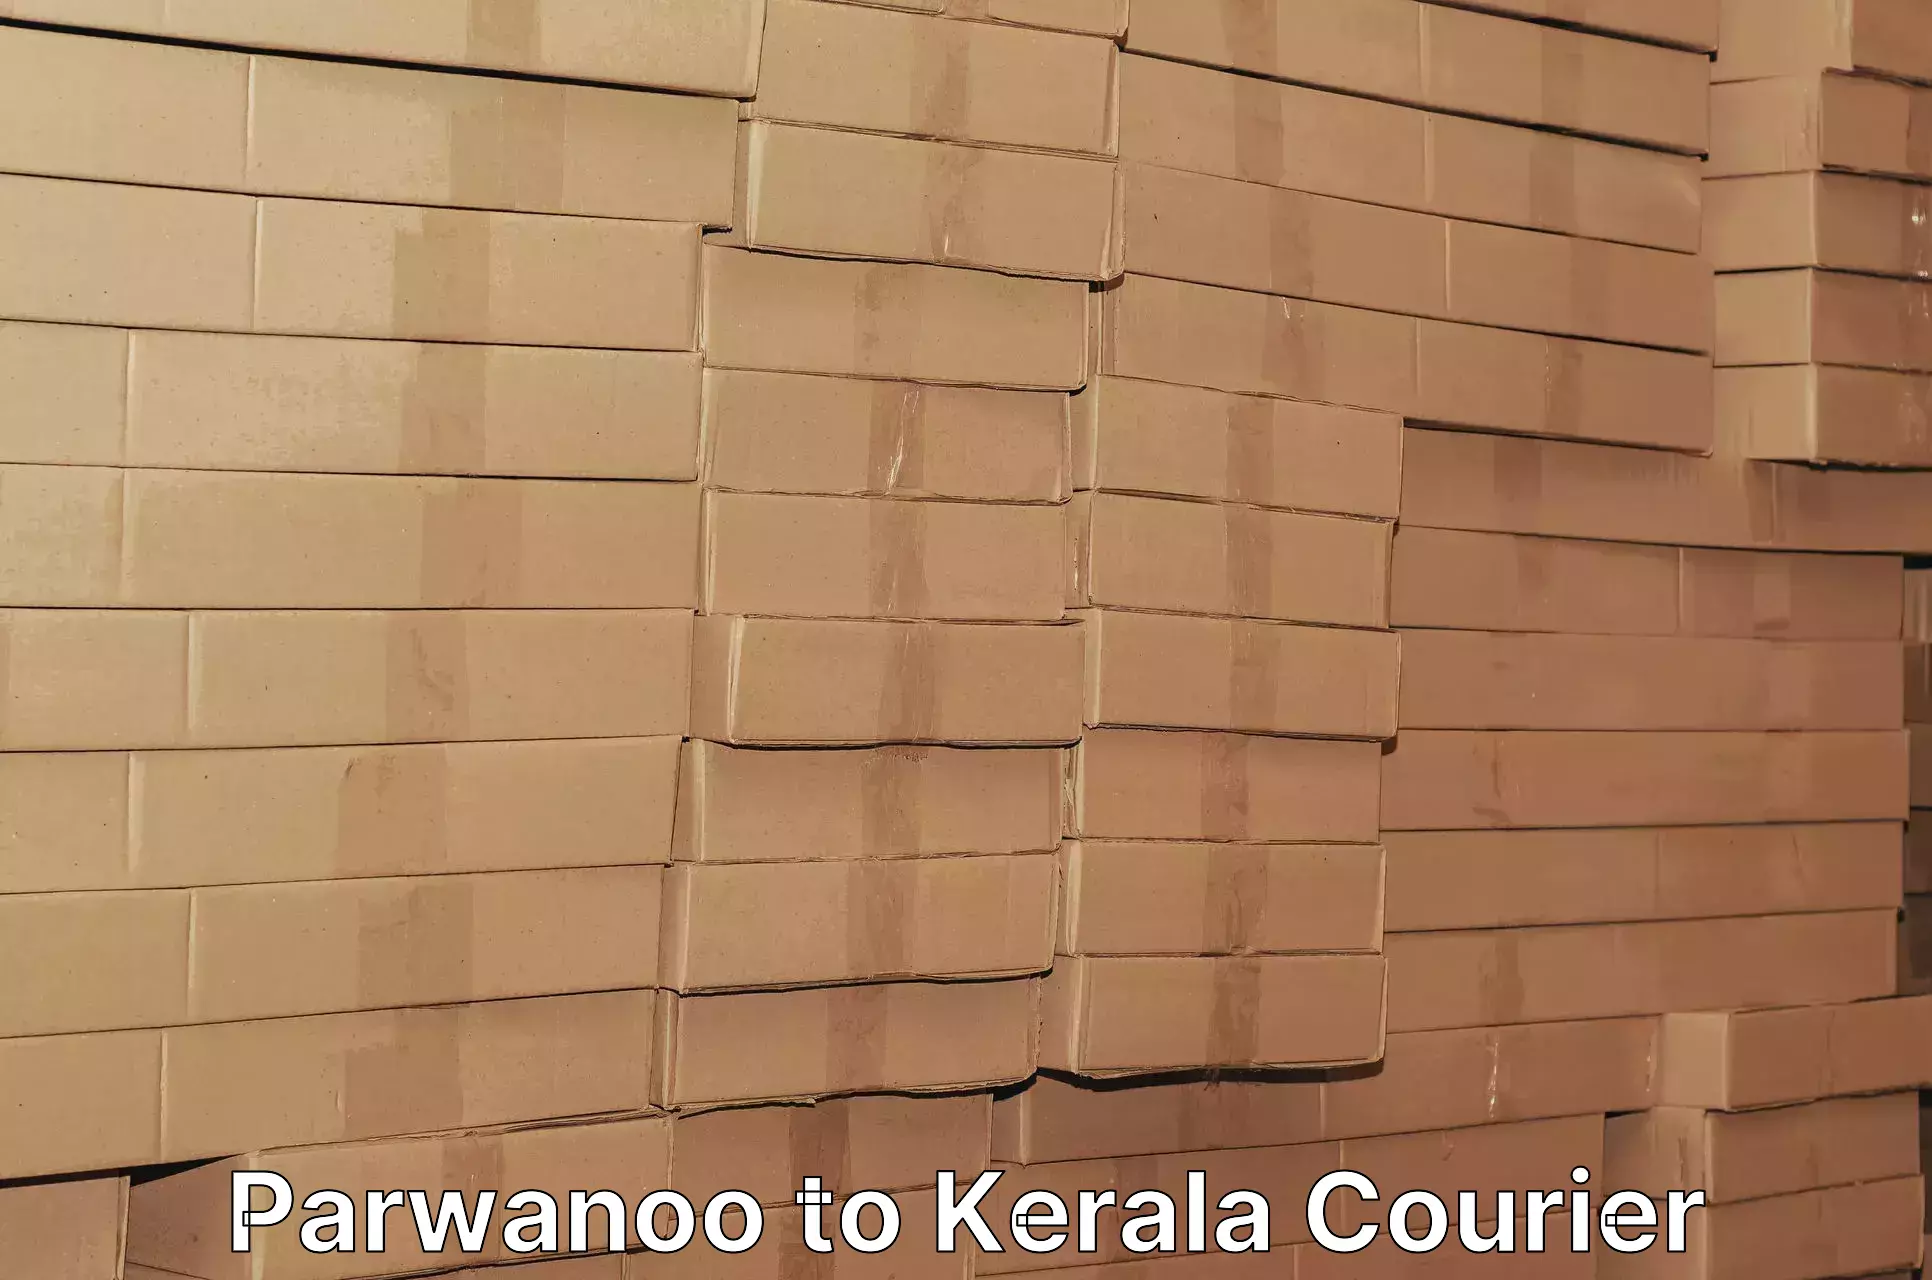 Logistics service provider Parwanoo to Kerala